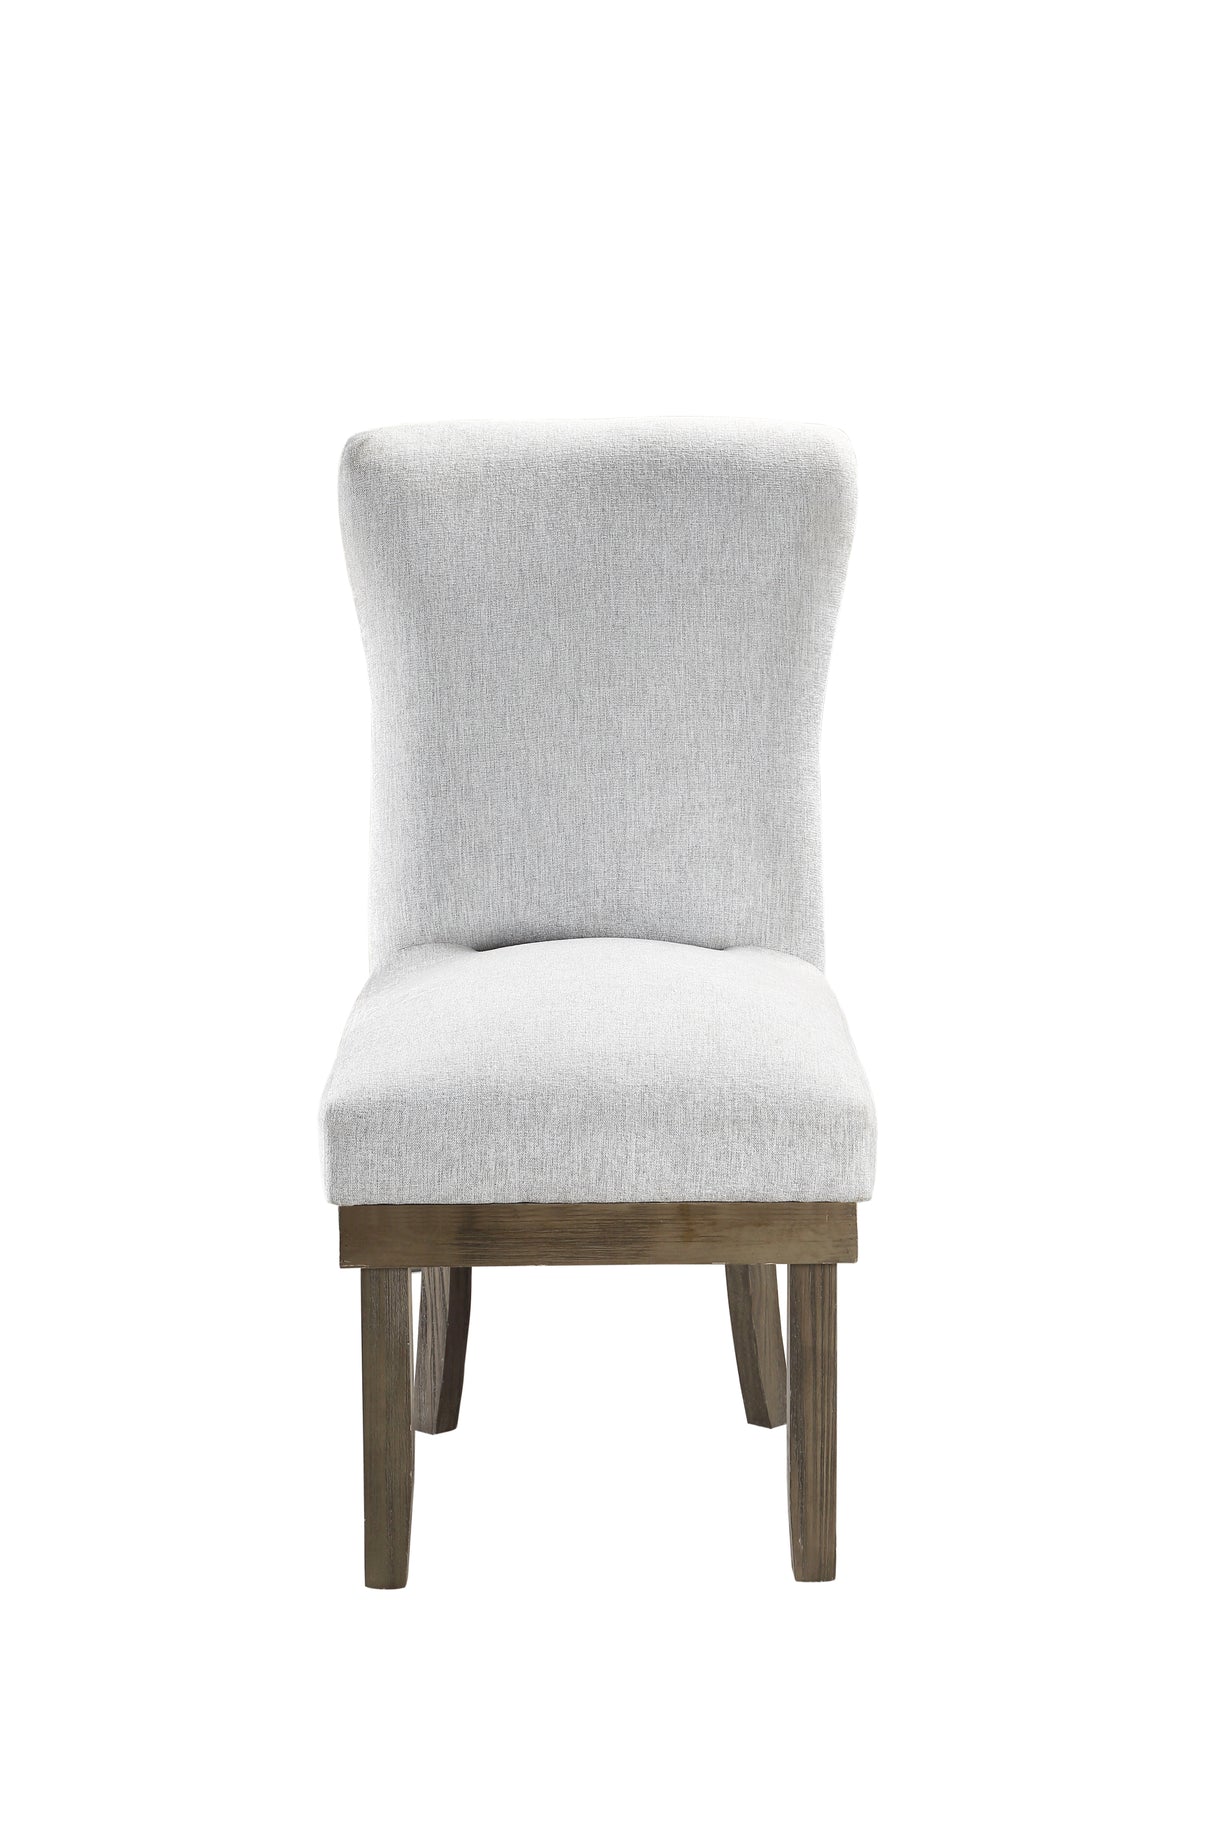 ACME Landon Side Chair (Set-2), Gray Linen DN00951 - Home Elegance USA